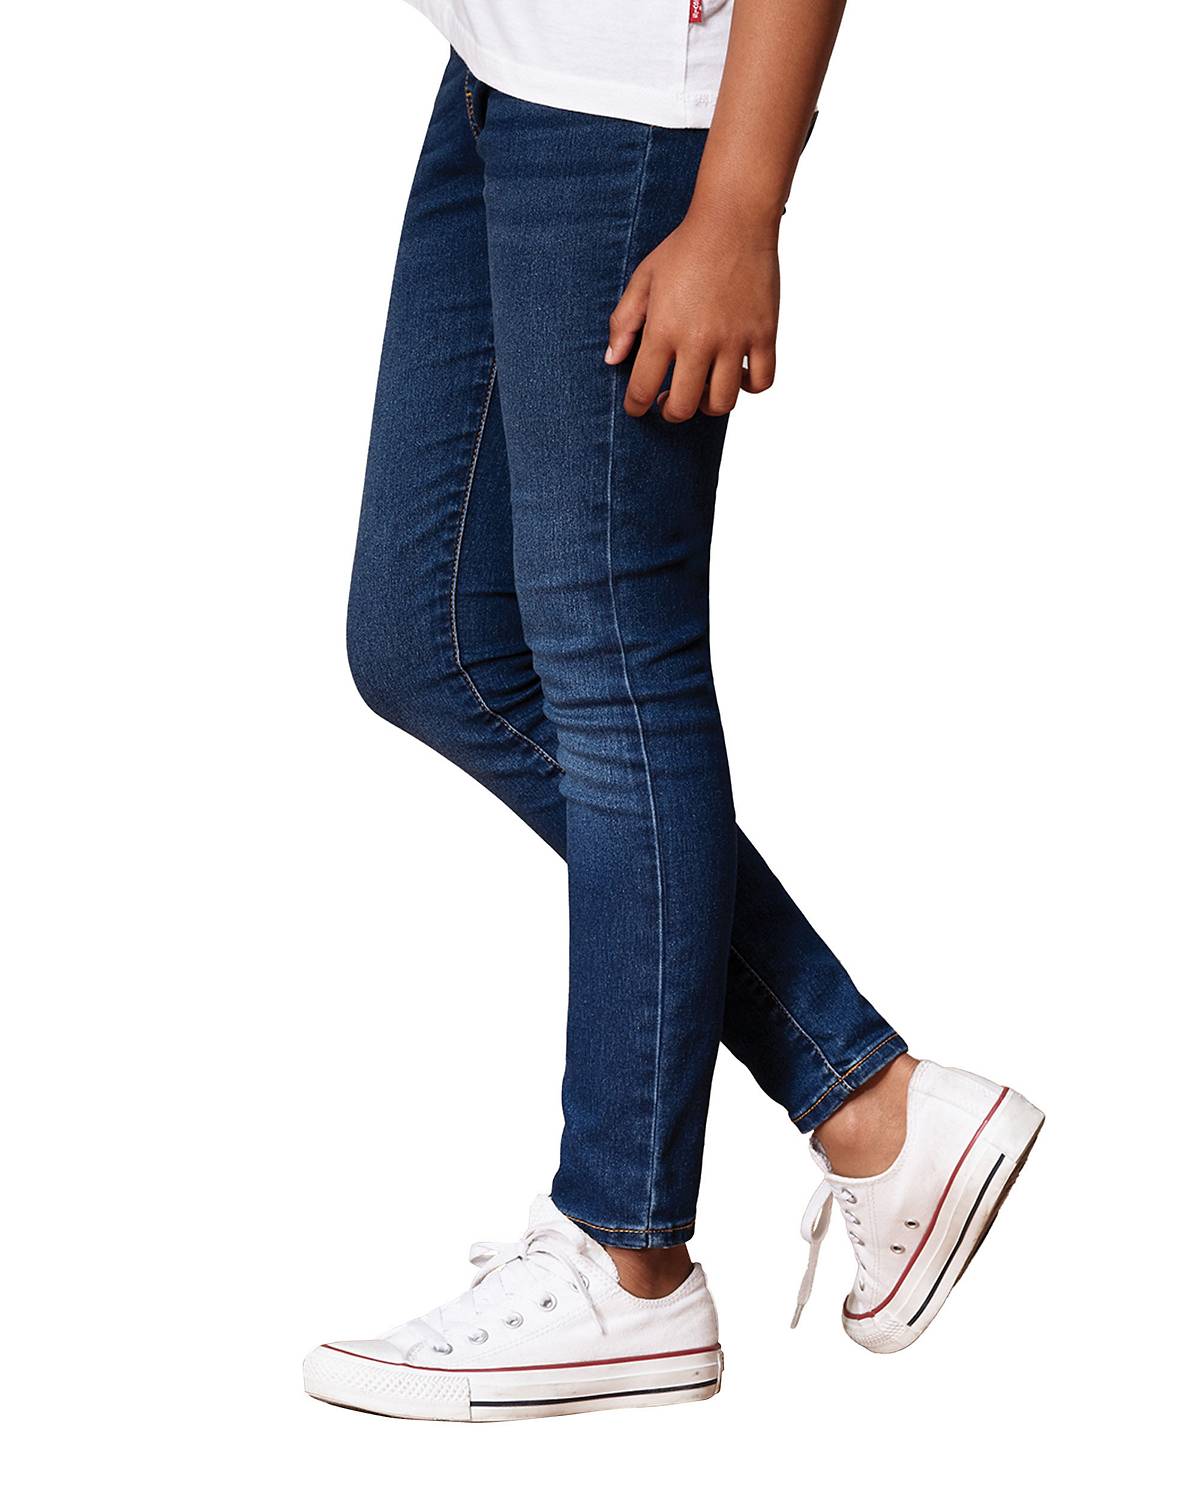 Girl wearing jean leggings